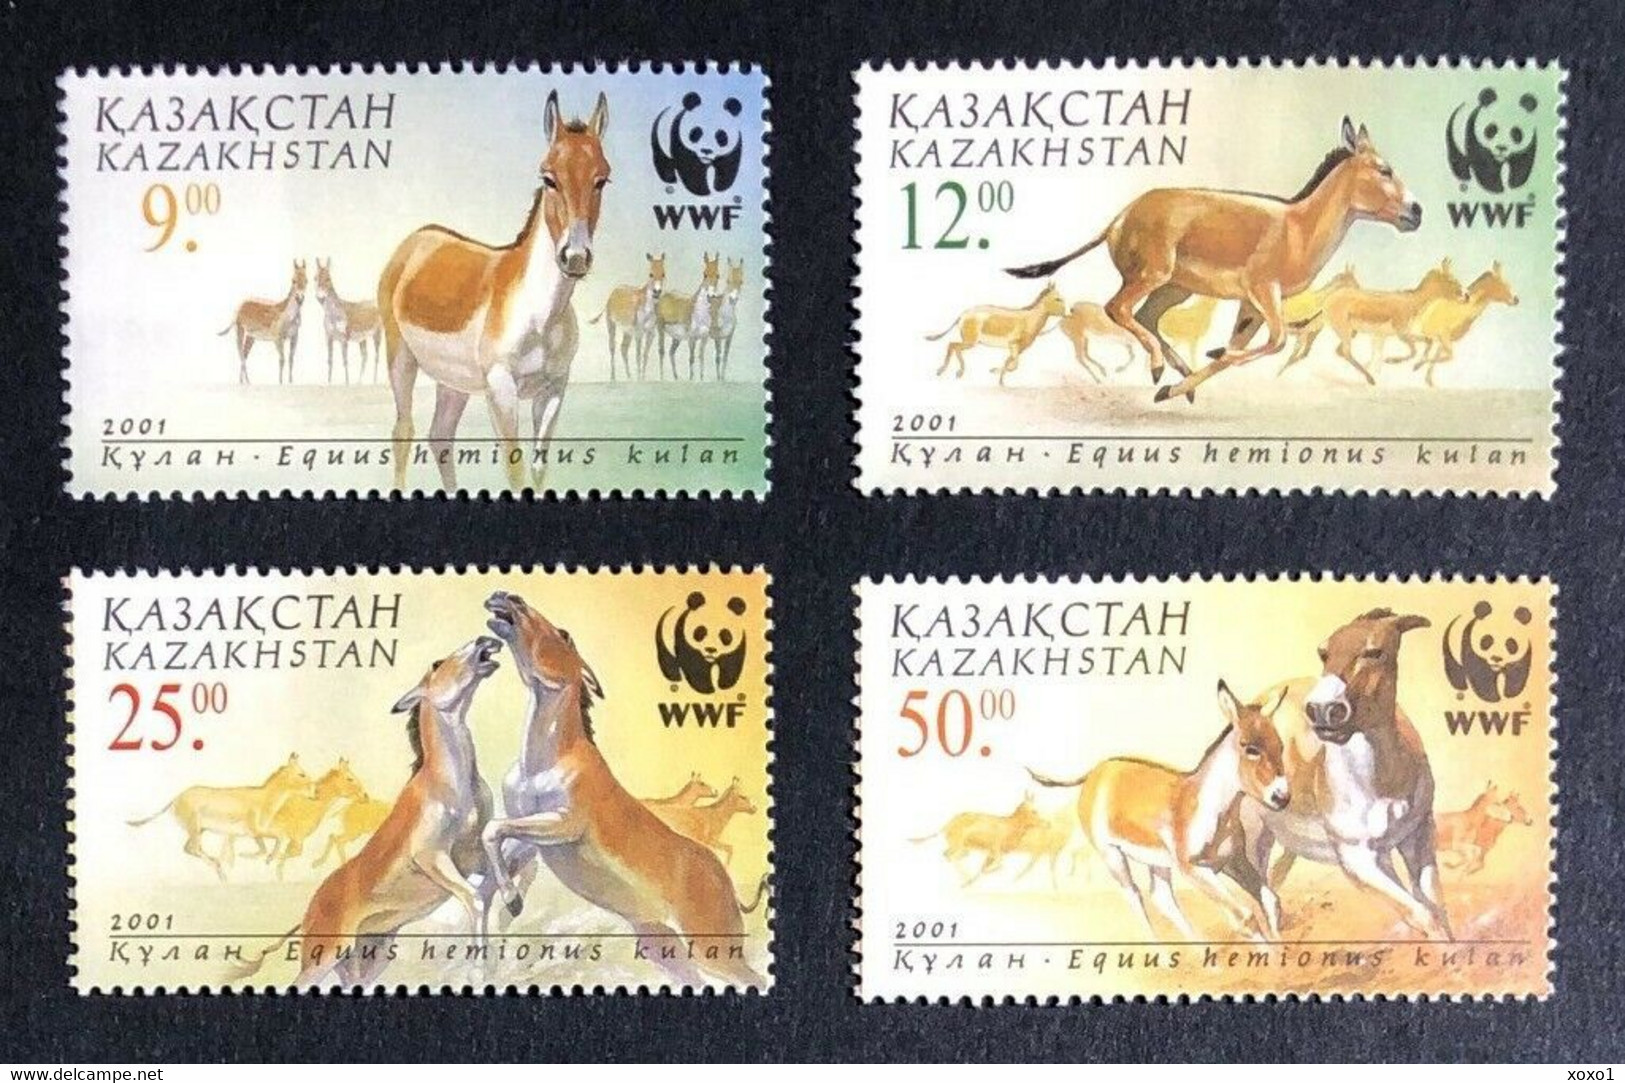 Kazakhstan 1997 MiNr. 345 - 348  Kasachstan  Animals Mammals Onager WWF 4v MNH** 5.00 € - Burros Y Asnos